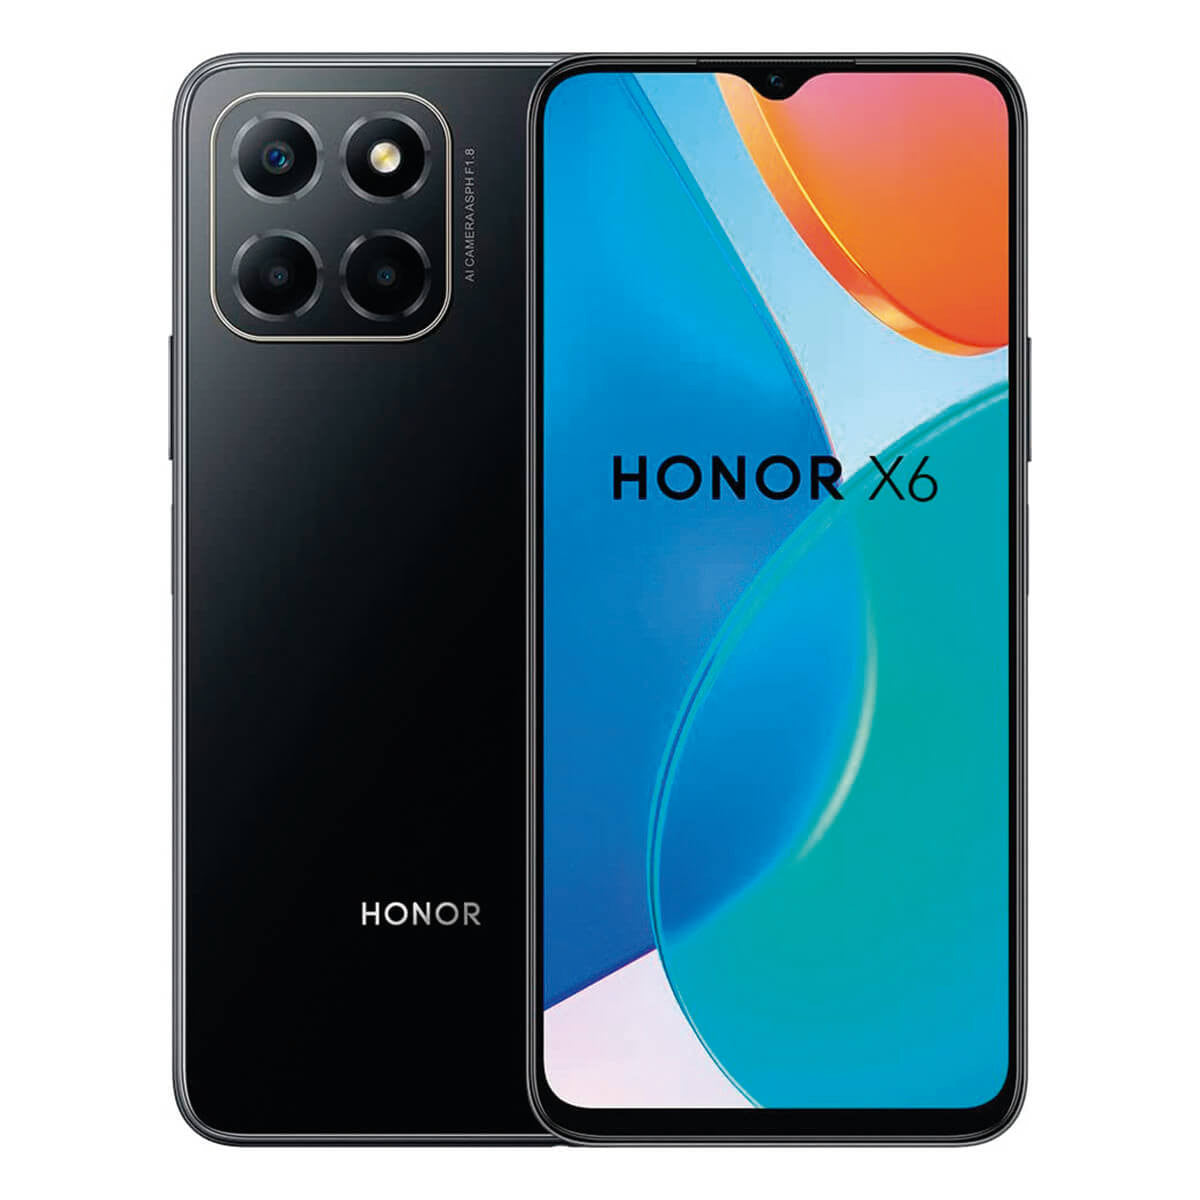 Honor X6 4GB/64GB Black (Midnight Black) Dual SIM Smartphone | Honor